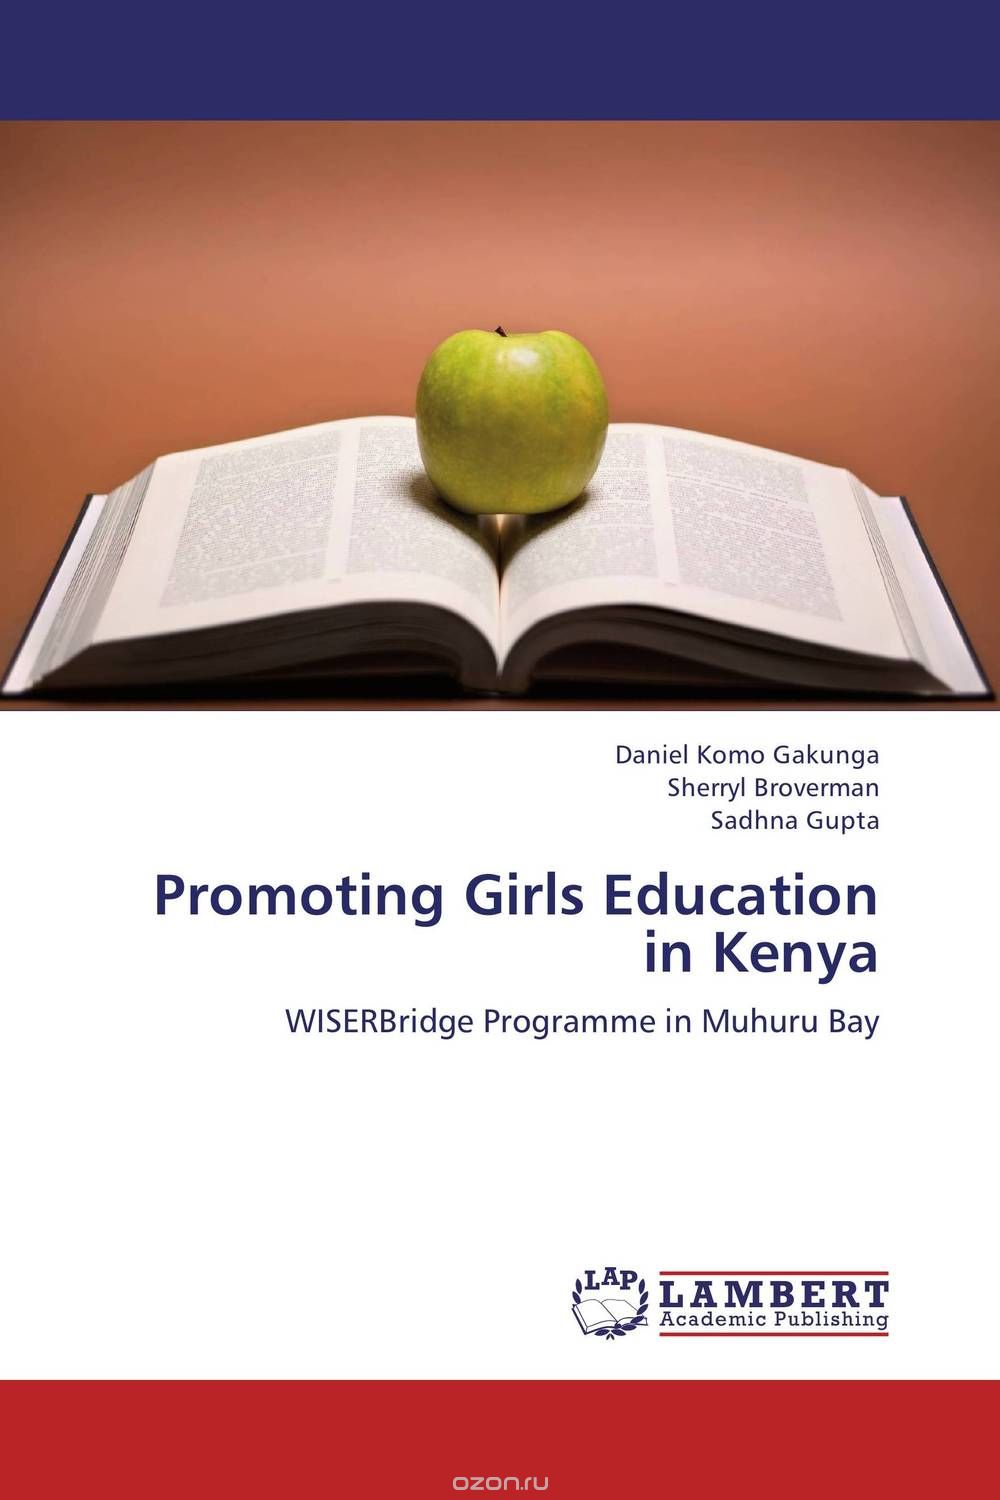 Скачать книгу "Promoting Girls Education in Kenya"